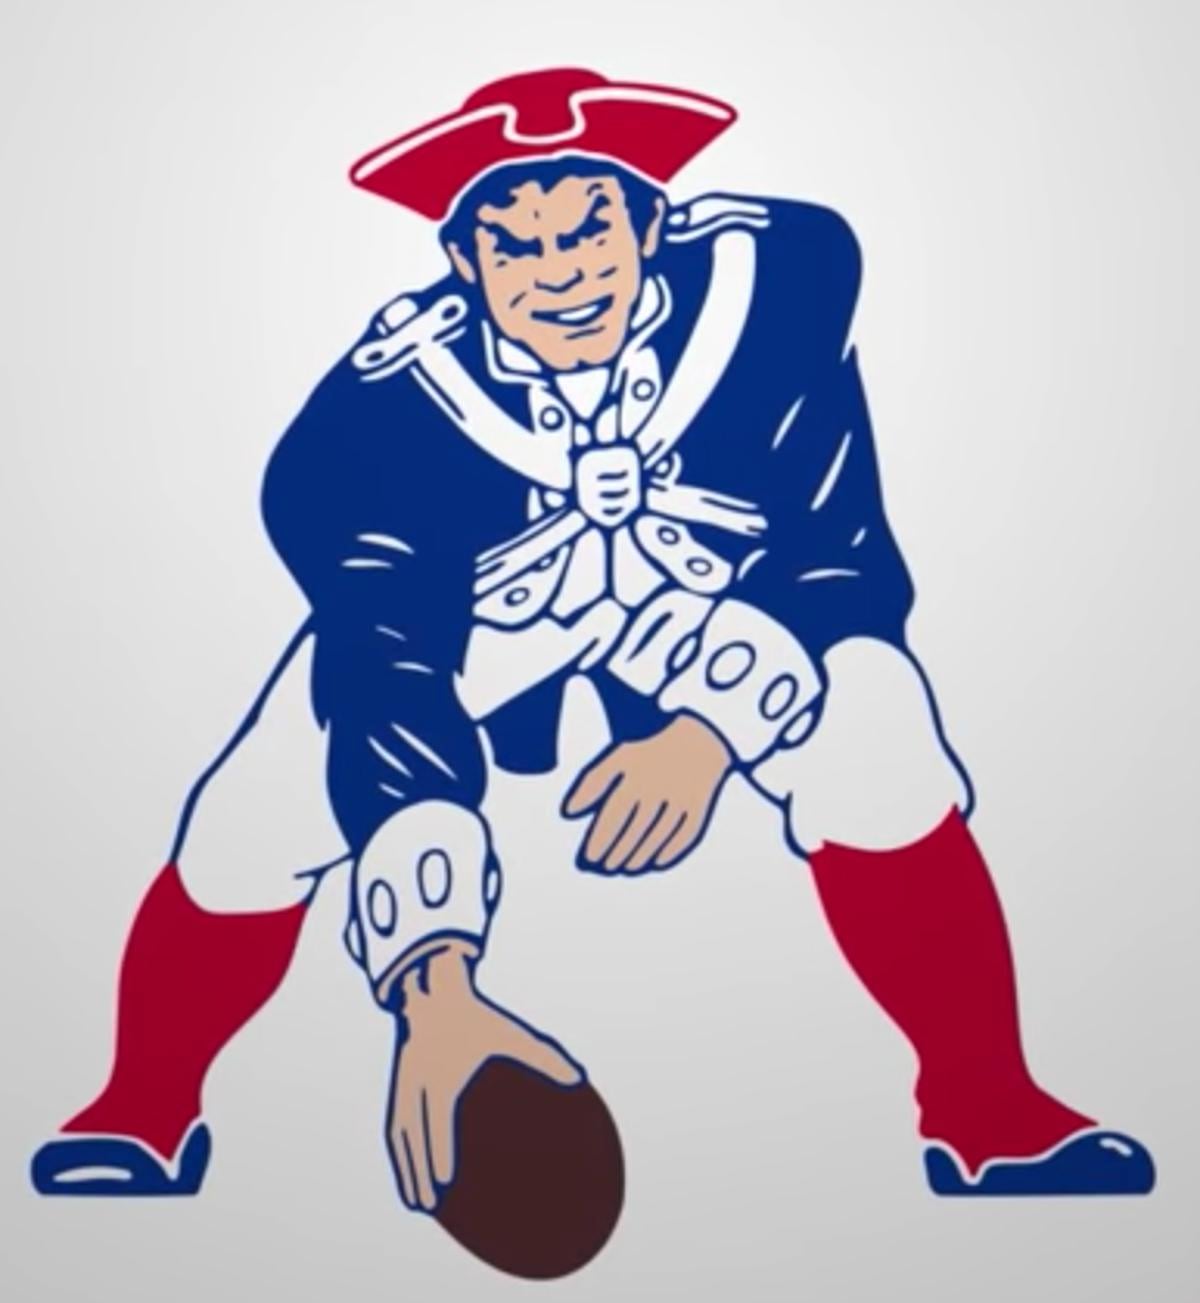 logo de los New England Patriots | 1989- 1992
Imagen: @ShowmundialShow